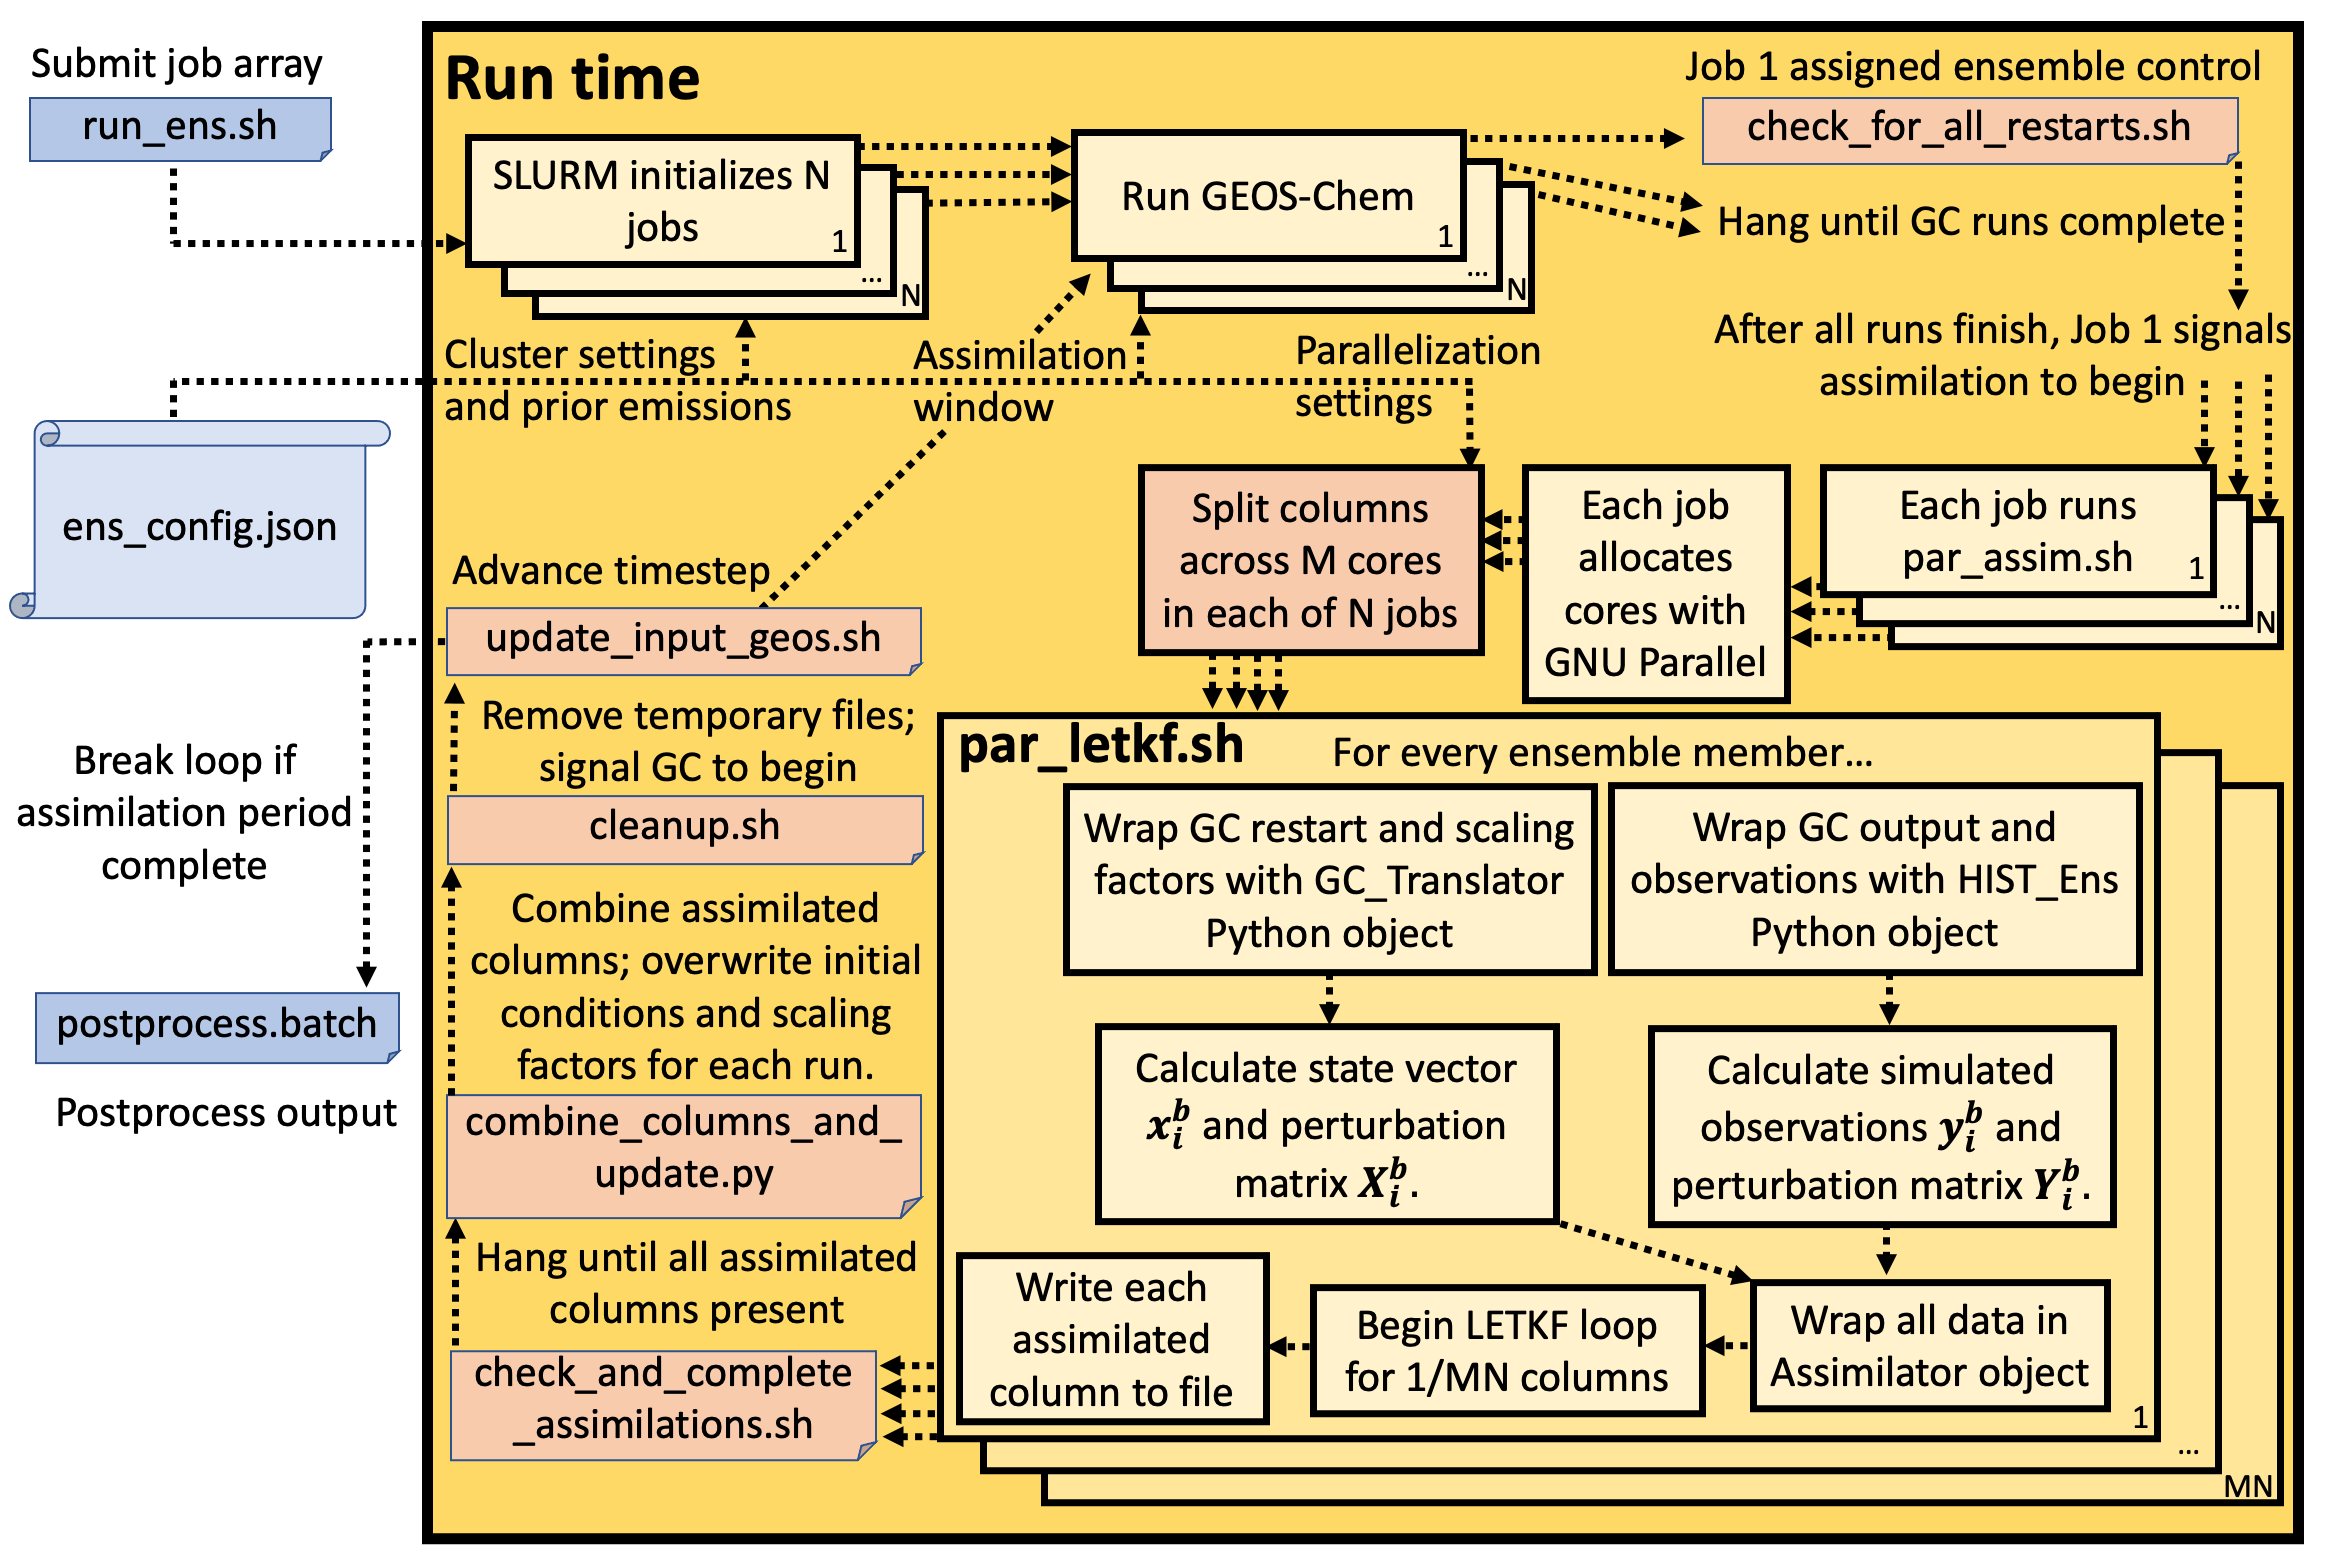 Figure showing the CHEEREIO runtime workflow process.